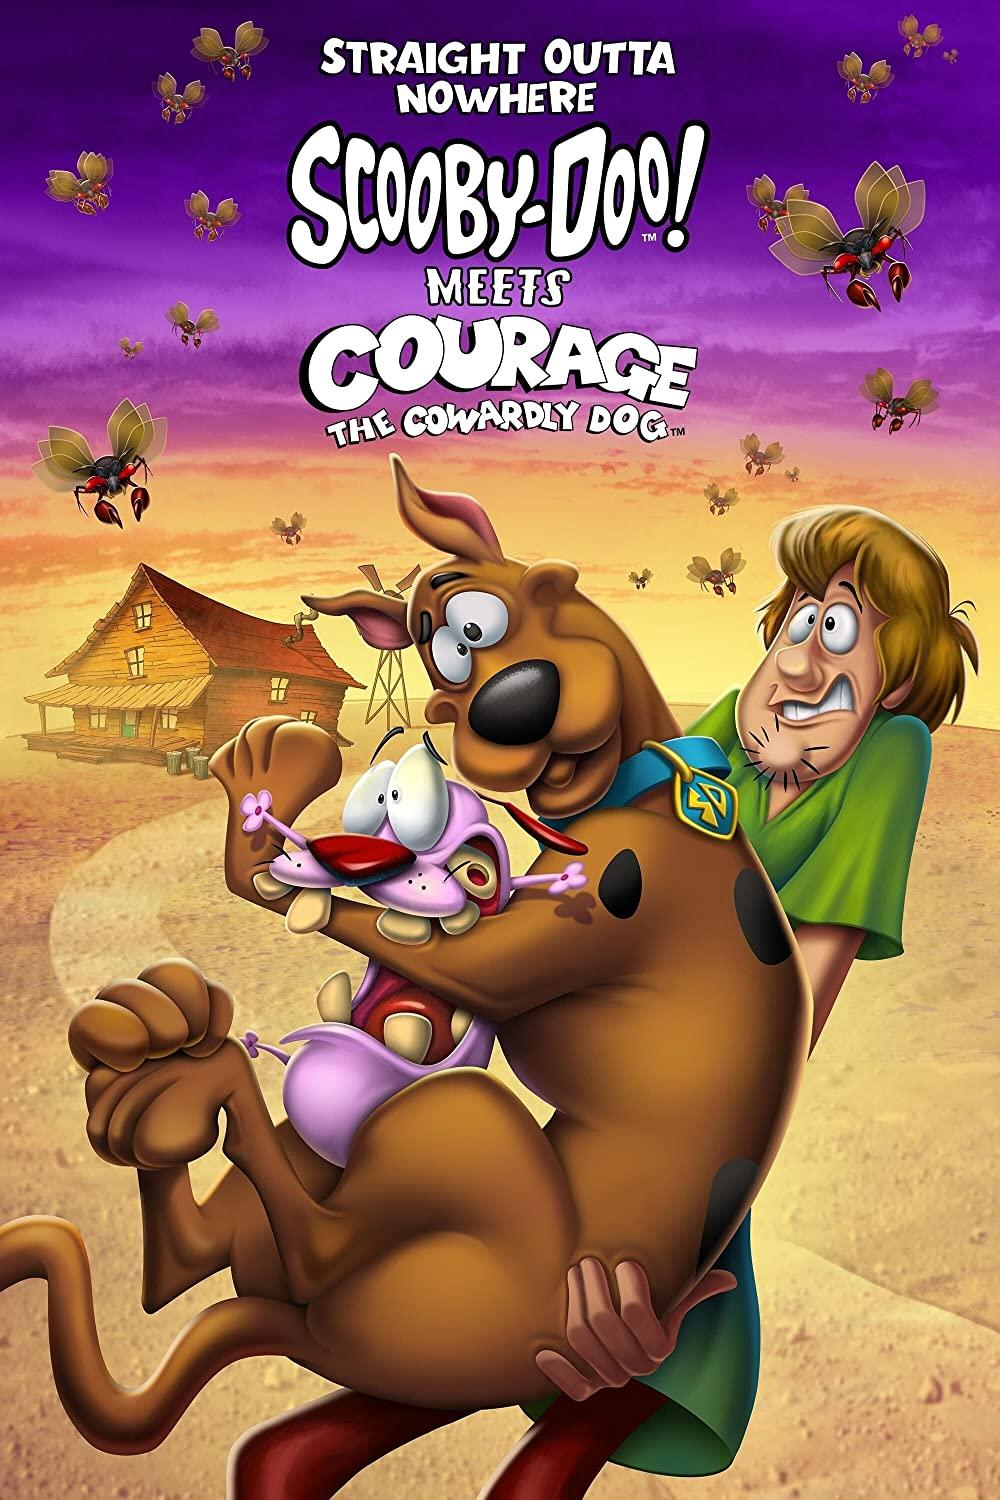 بوستر Straight Outta Nowhere: Scooby-Doo! Meets Courage the Cowardly Dog